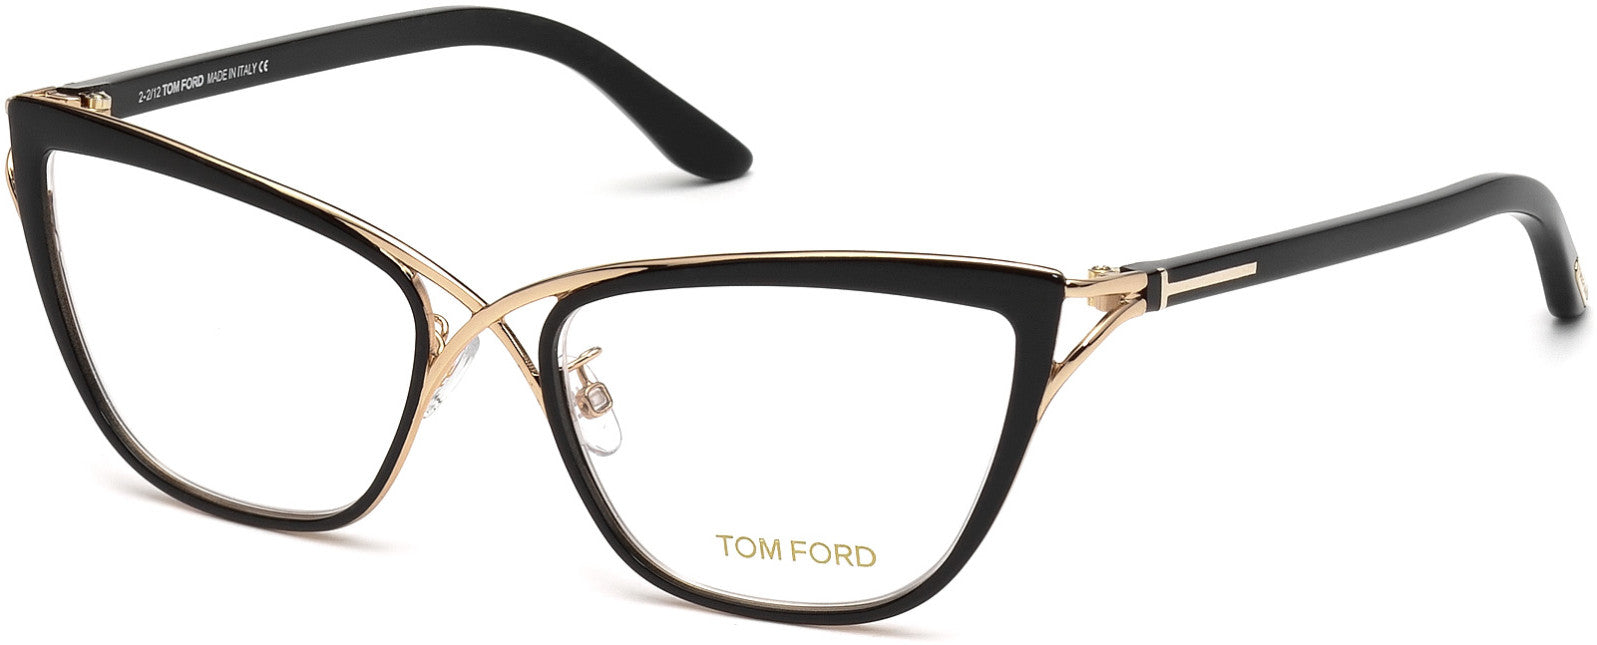 Tom Ford FT5272 Cat Eyeglasses 005-005 - Black Eye Rims & Temples, Gold Metal Details